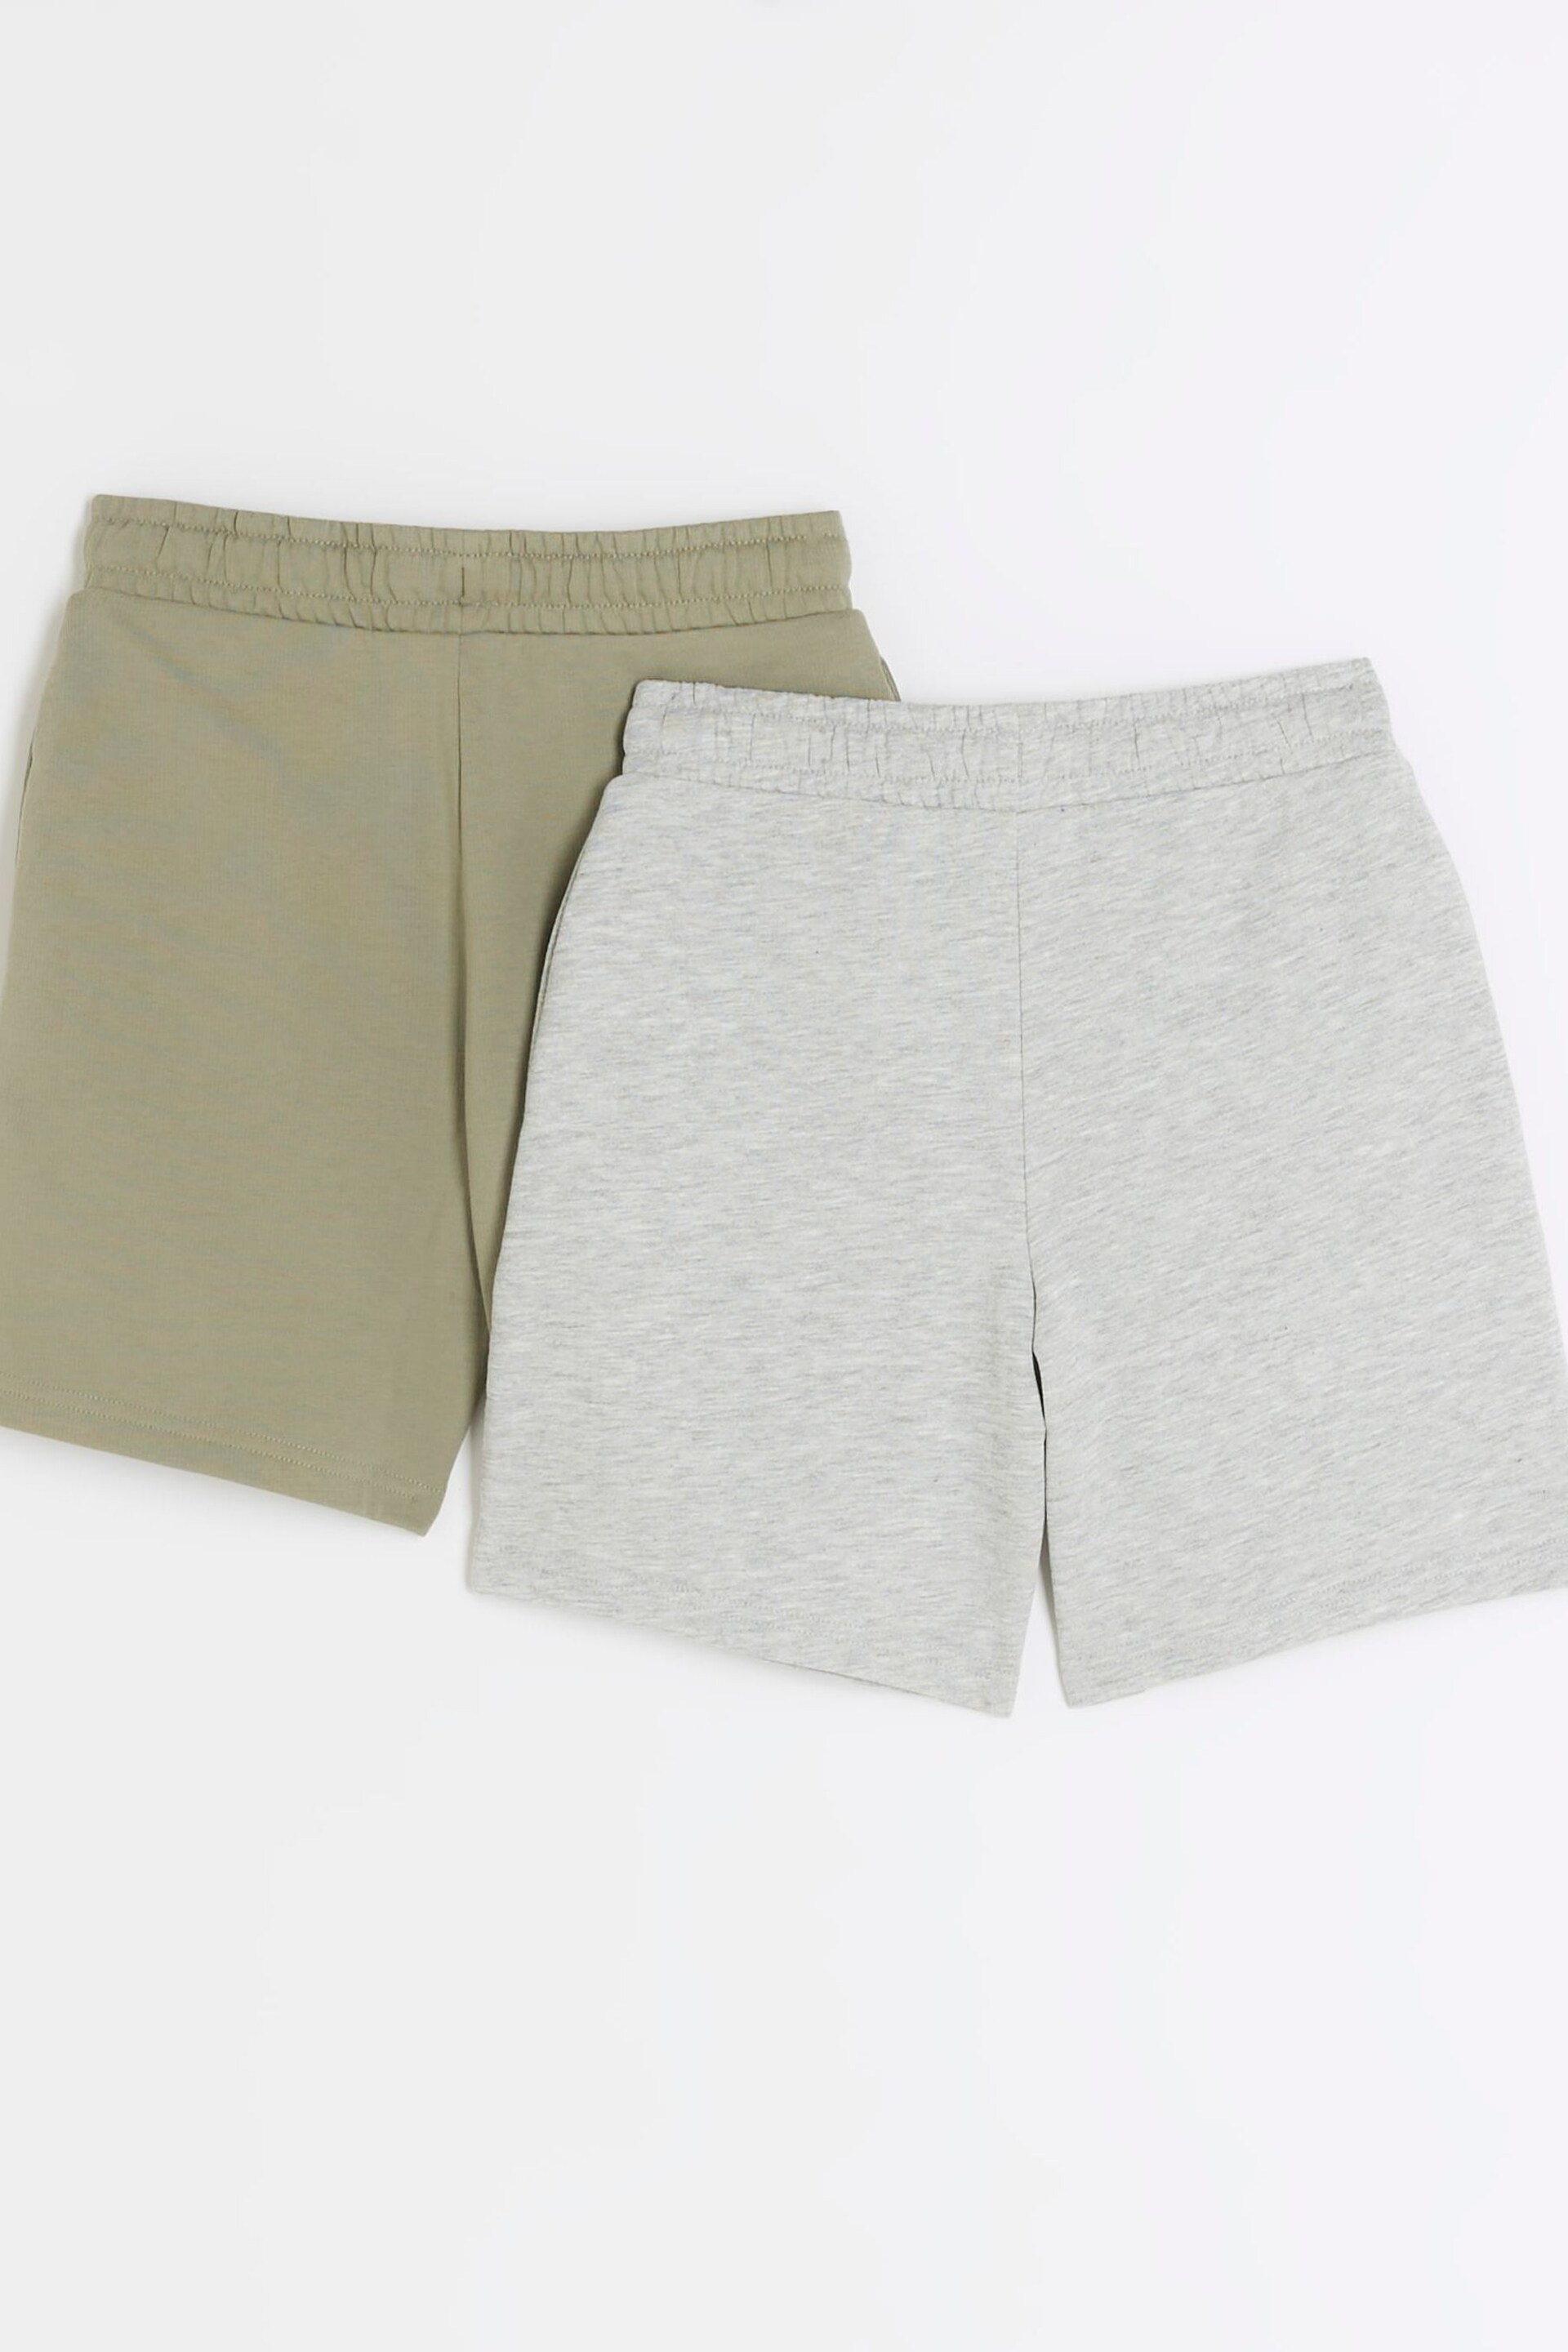 River Island Grey Mini Boys Multipack Shorts - Image 2 of 4